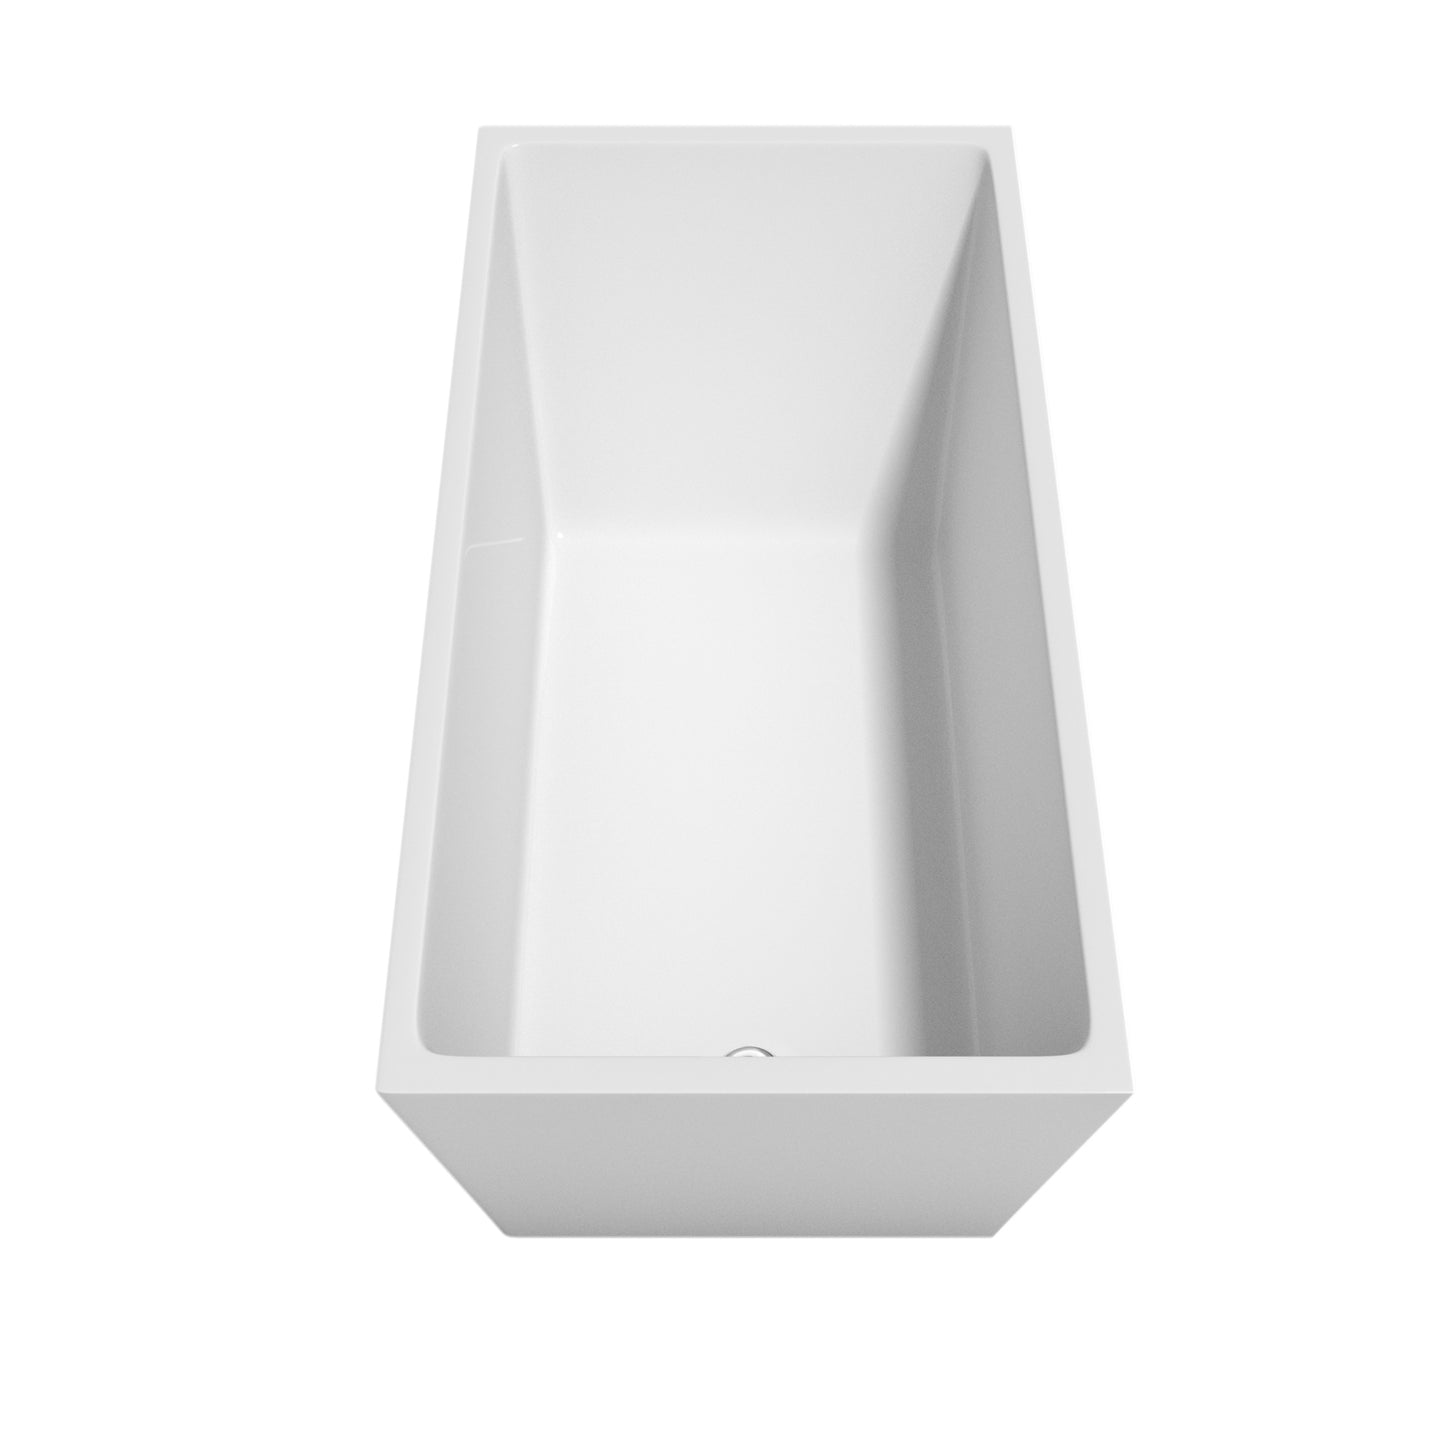 59 inch Freestanding Bathtub in White with Floor Mounted Faucet, Drain and Overflow Trim - Luxe Bathroom Vanities Luxury Bathroom Fixtures Bathroom Furniture